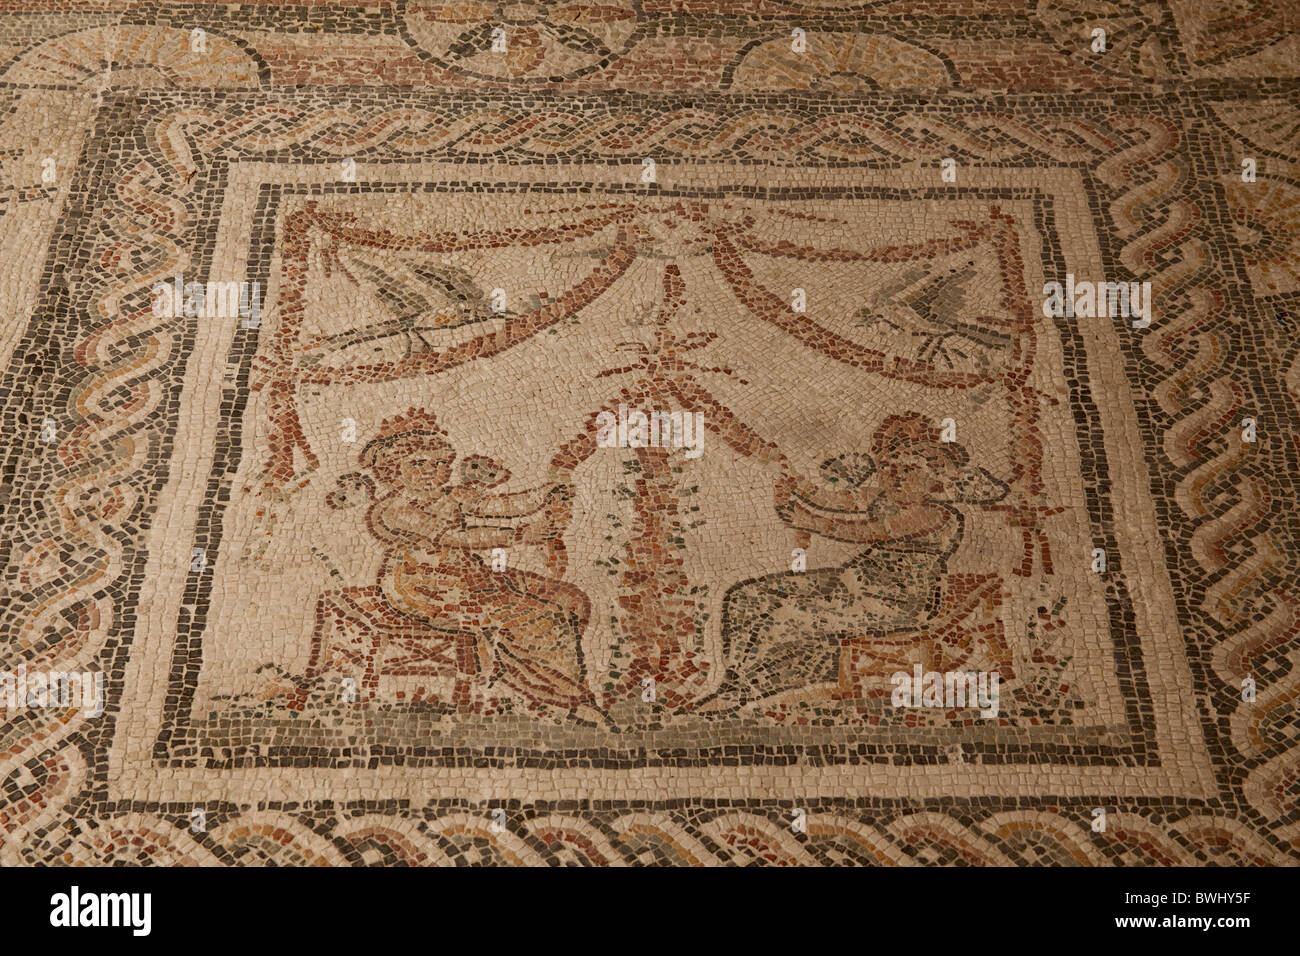 Roman mosaic floor in the Villa Romana, a Roman villa in the town of Desenzano Lake Garda Stock Photo